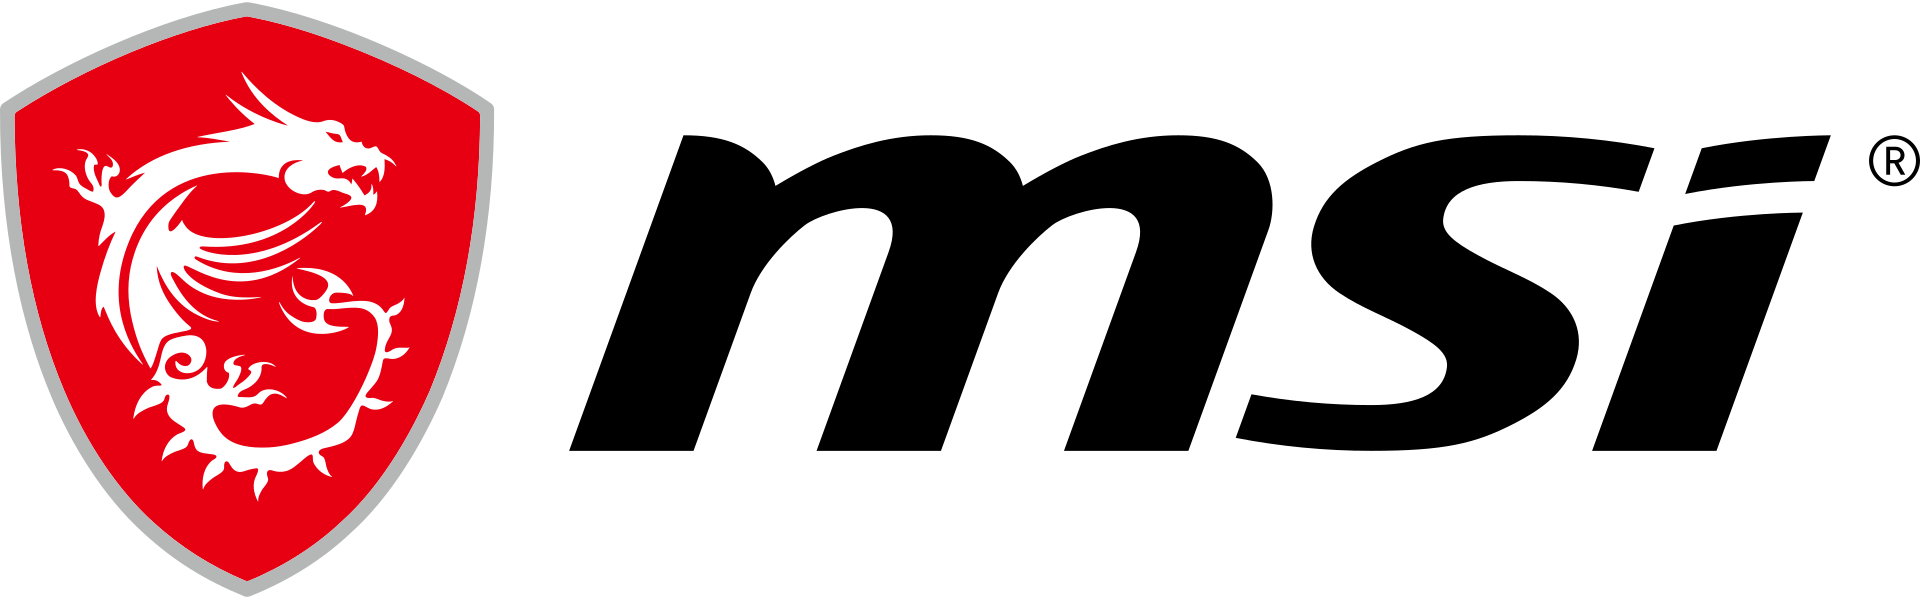 The logo of MSI